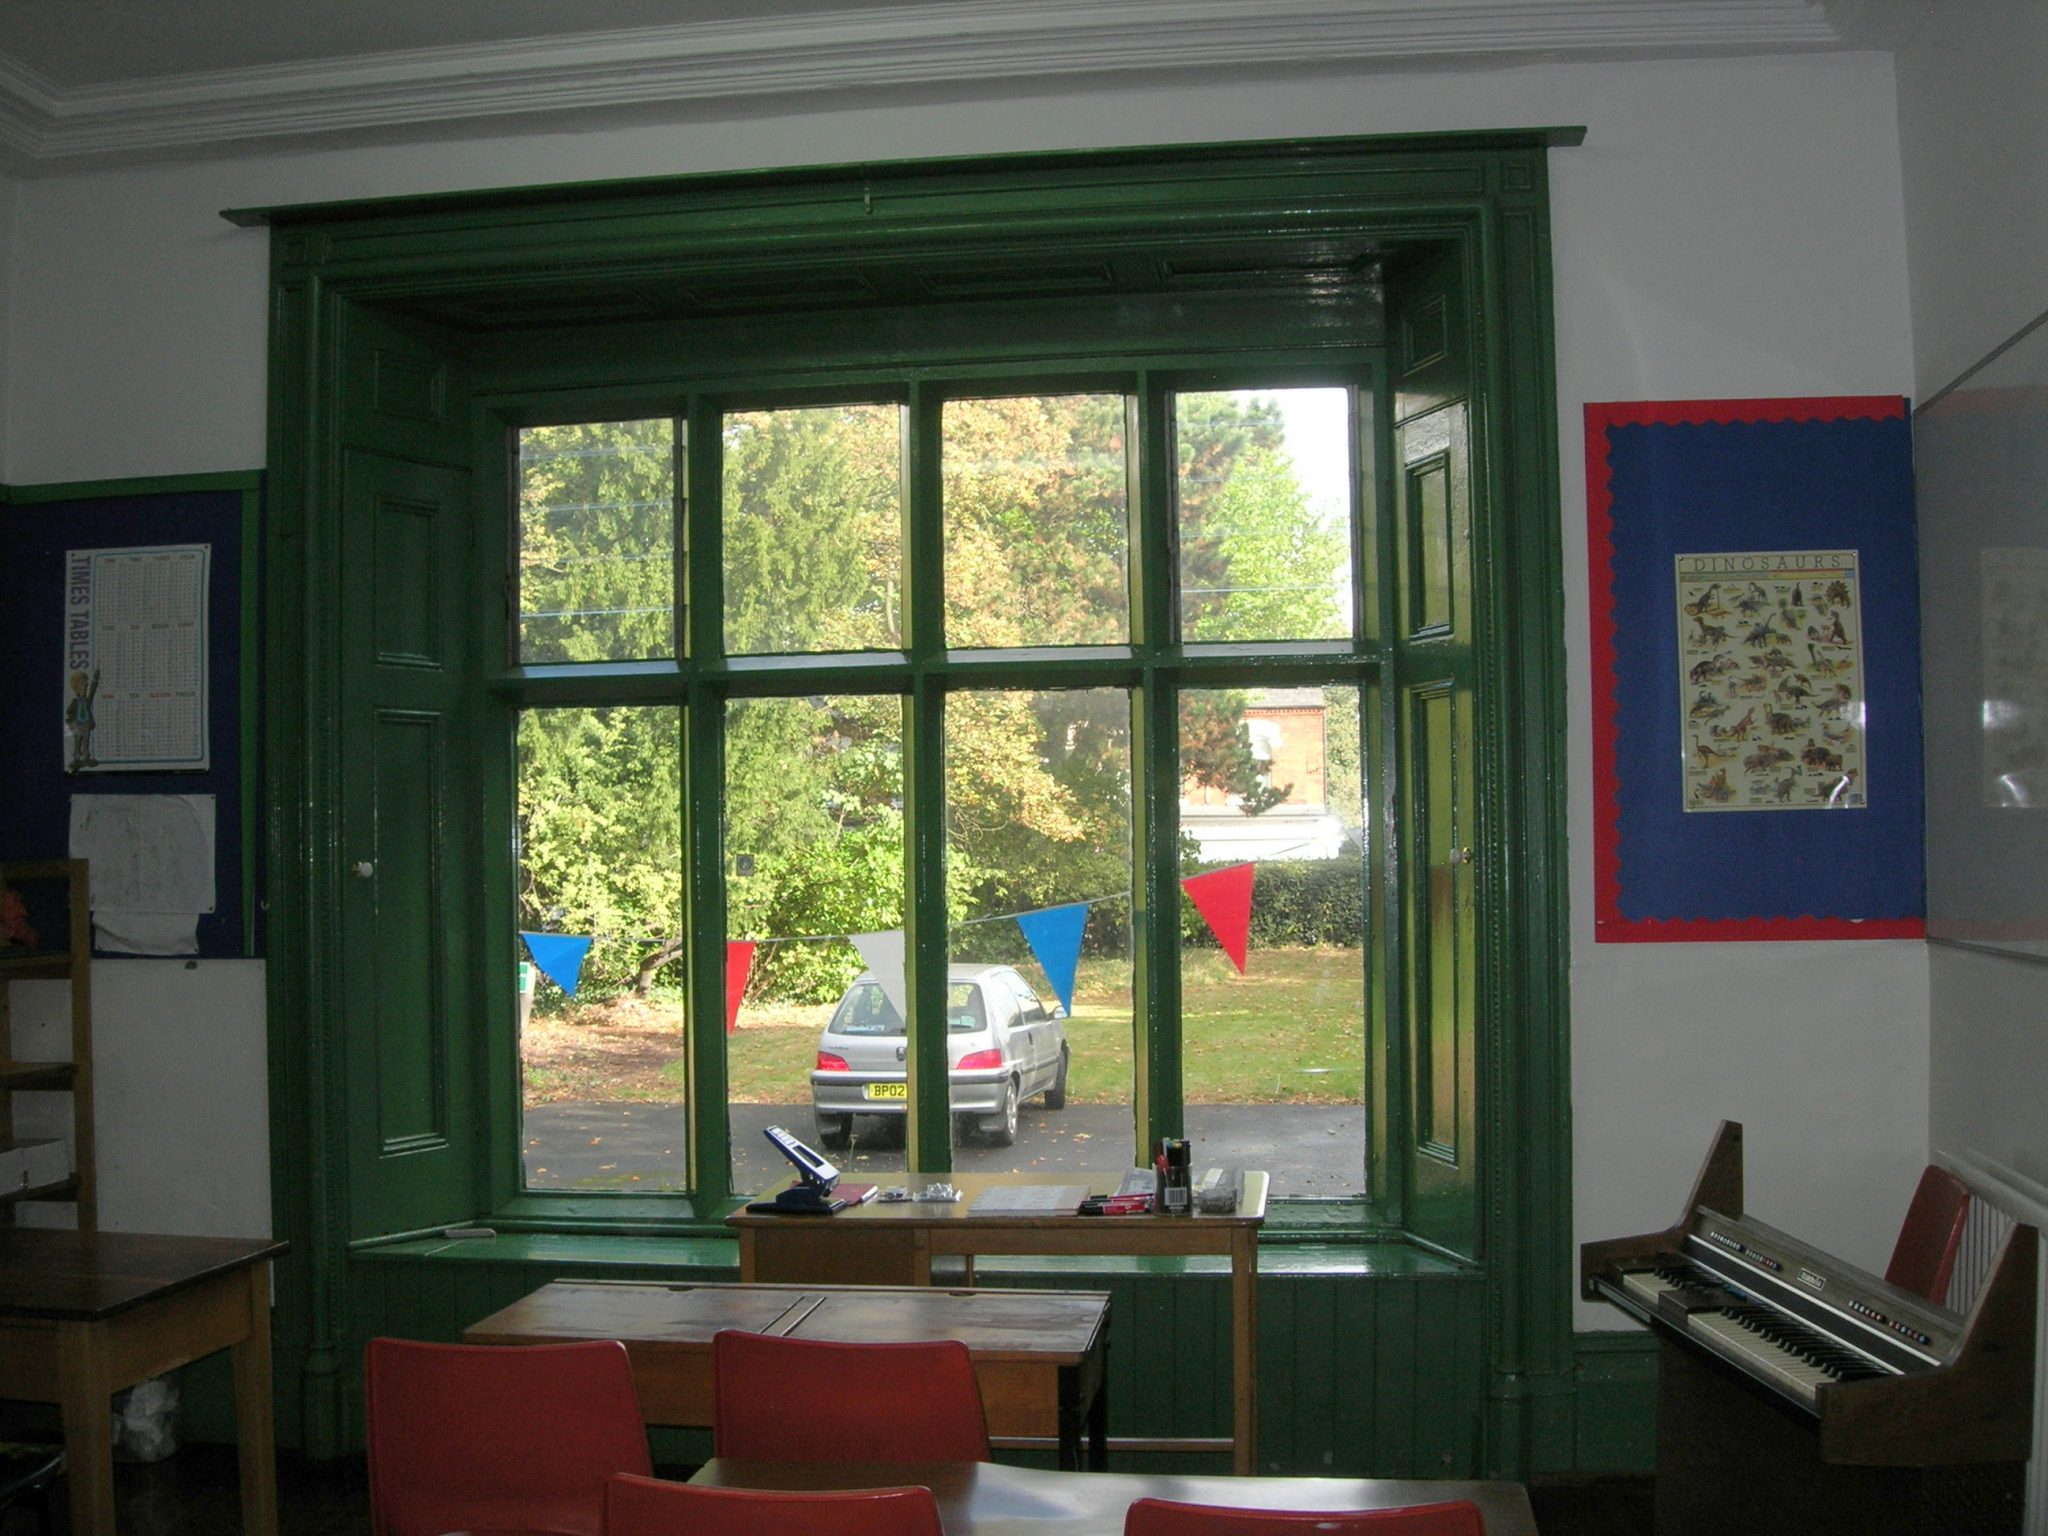 Vardagsrum med grönt fönster.  Källa: acocksgreenfocusgroup.org.uk